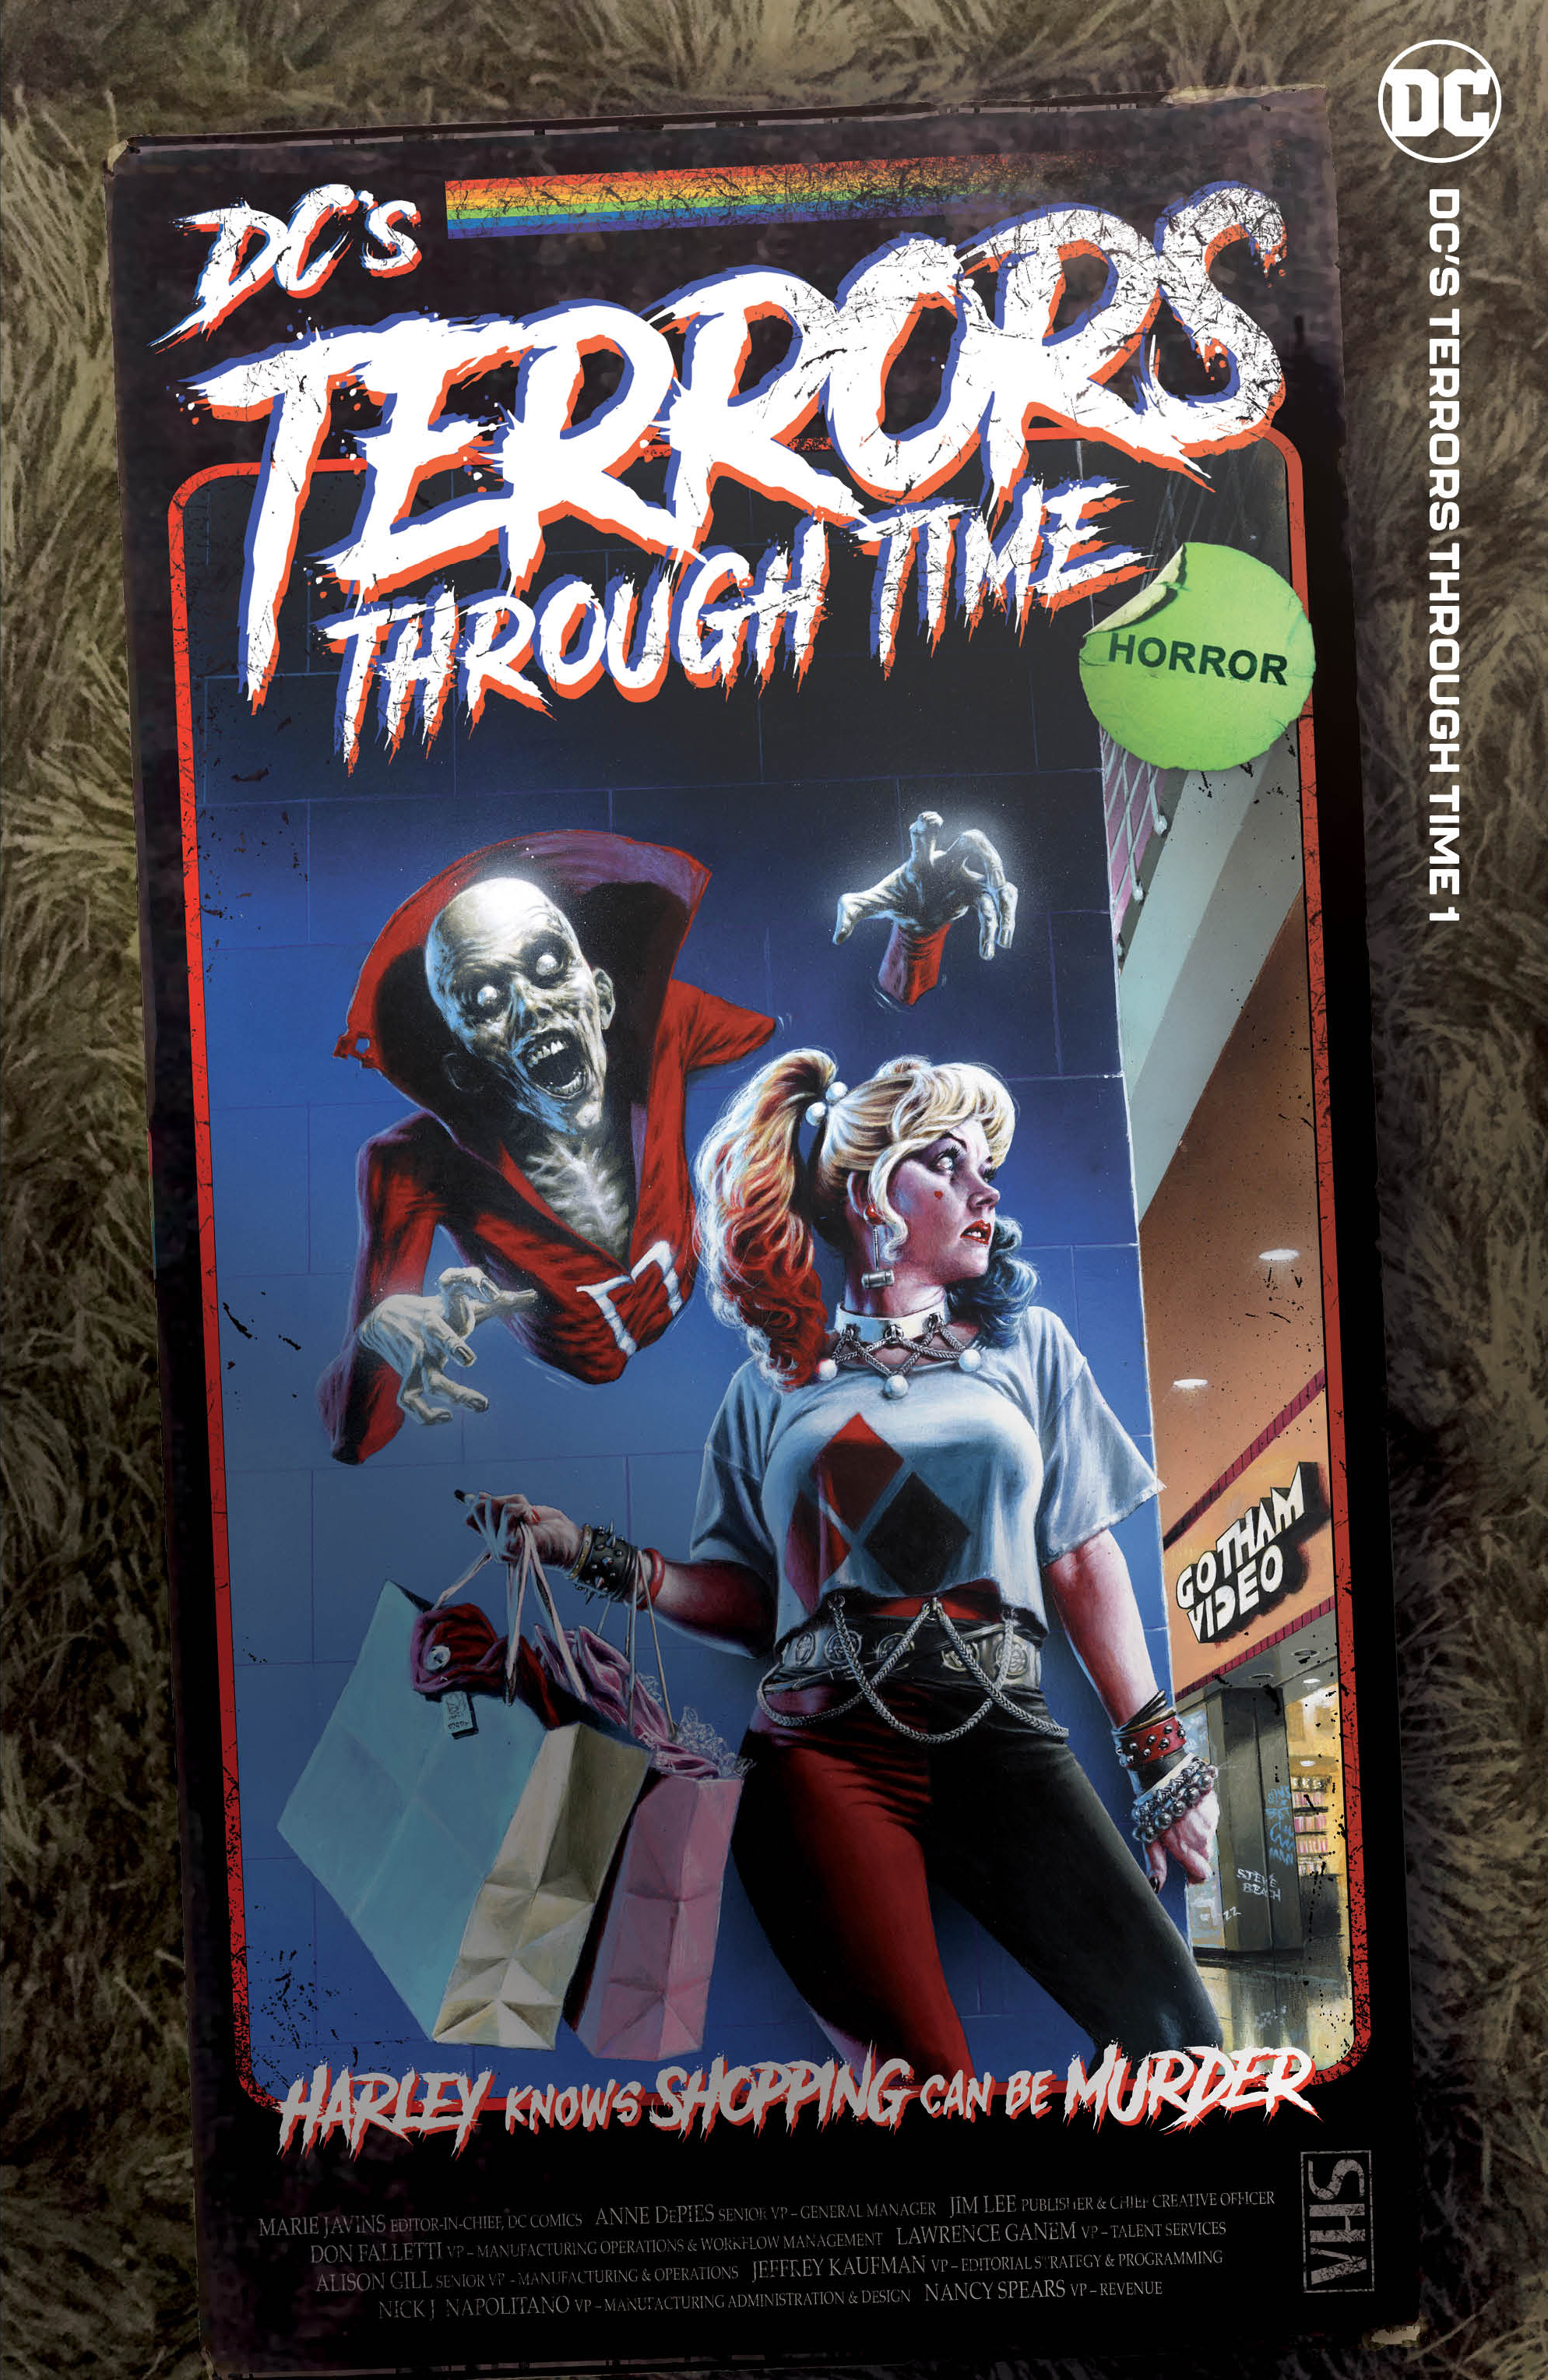 Dcs Terrors Through Time #1 (One Shot) Cover B Steve Beach Vhs Variant